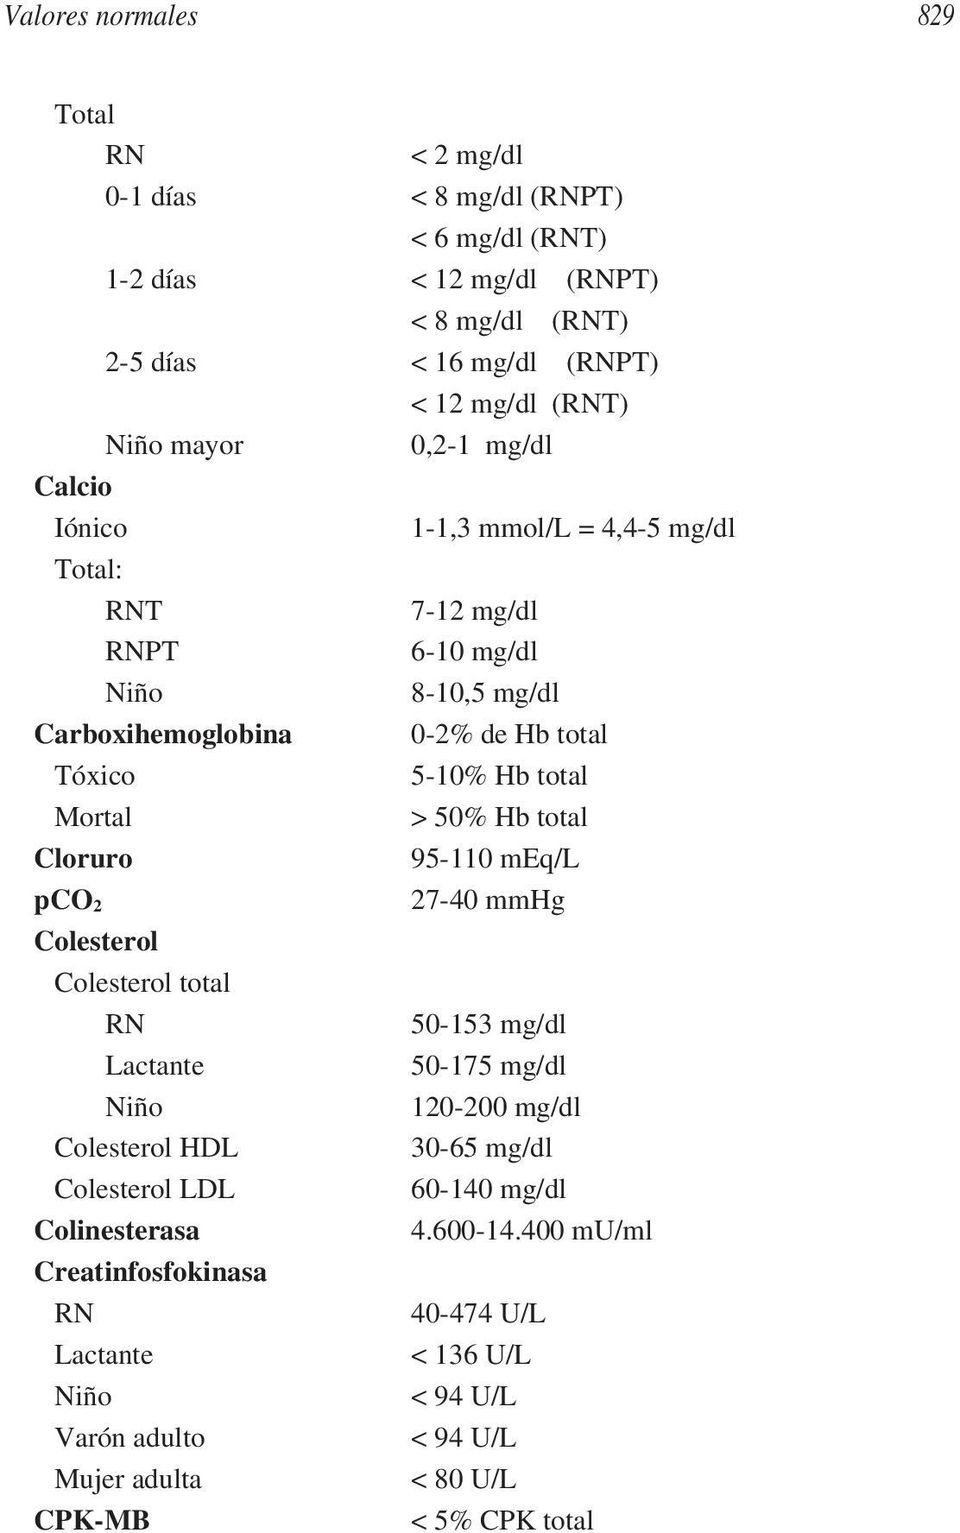 Mortal > 50% Hb total Cloruro 95-110 meq/l pco 2 27-40 mmhg Colesterol Colesterol total 50-153 mg/dl 50-175 mg/dl 120-200 mg/dl Colesterol HDL 30-65 mg/dl